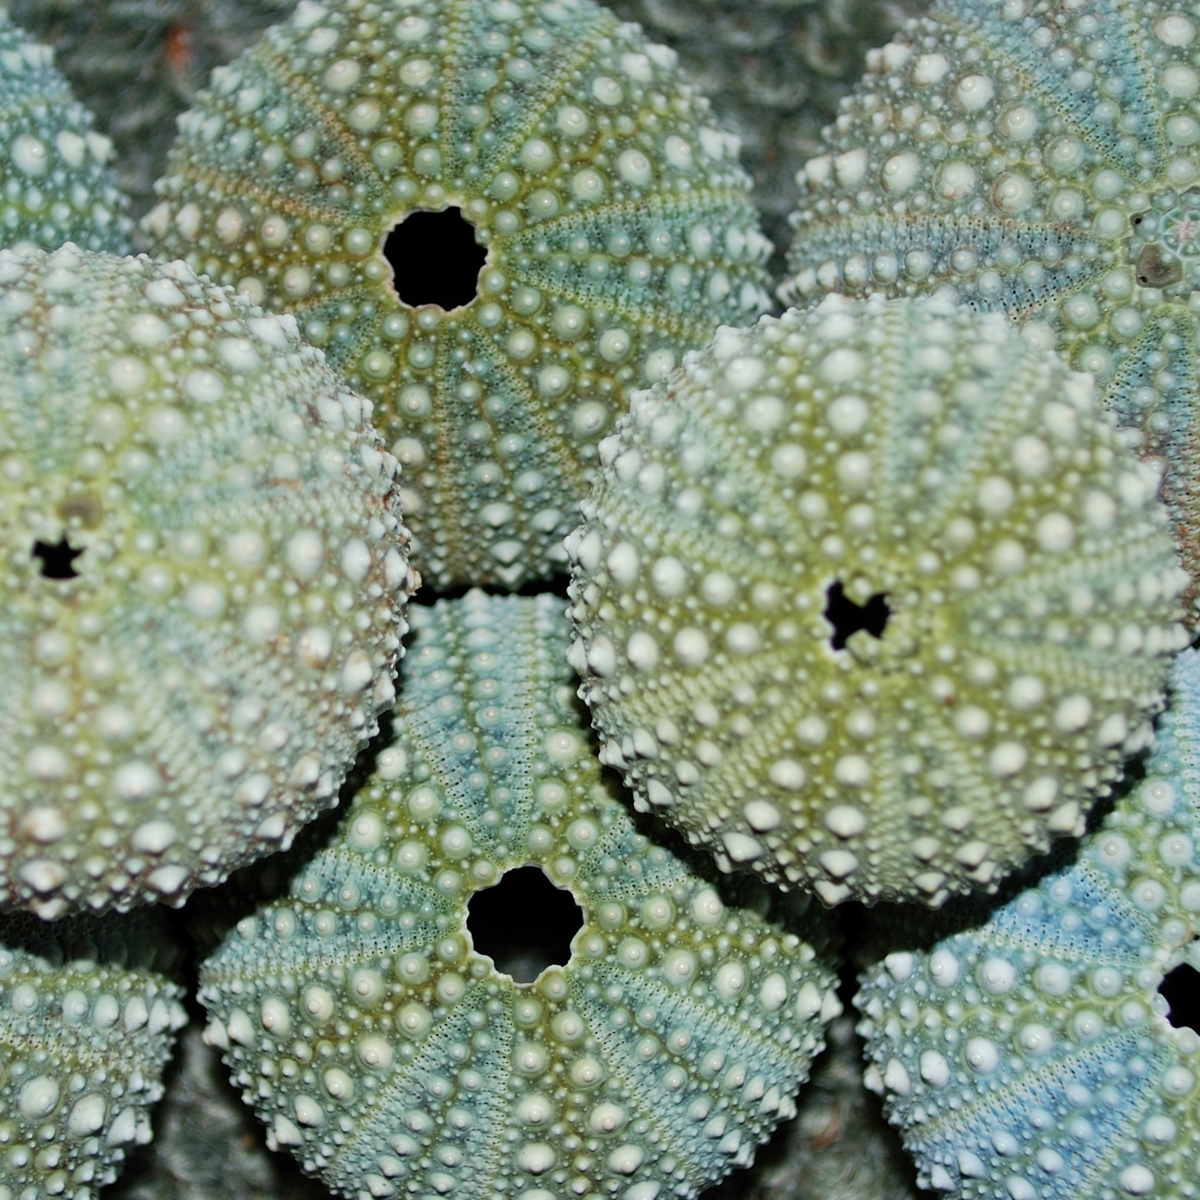 Kina shells (sea egg/sea urchin)